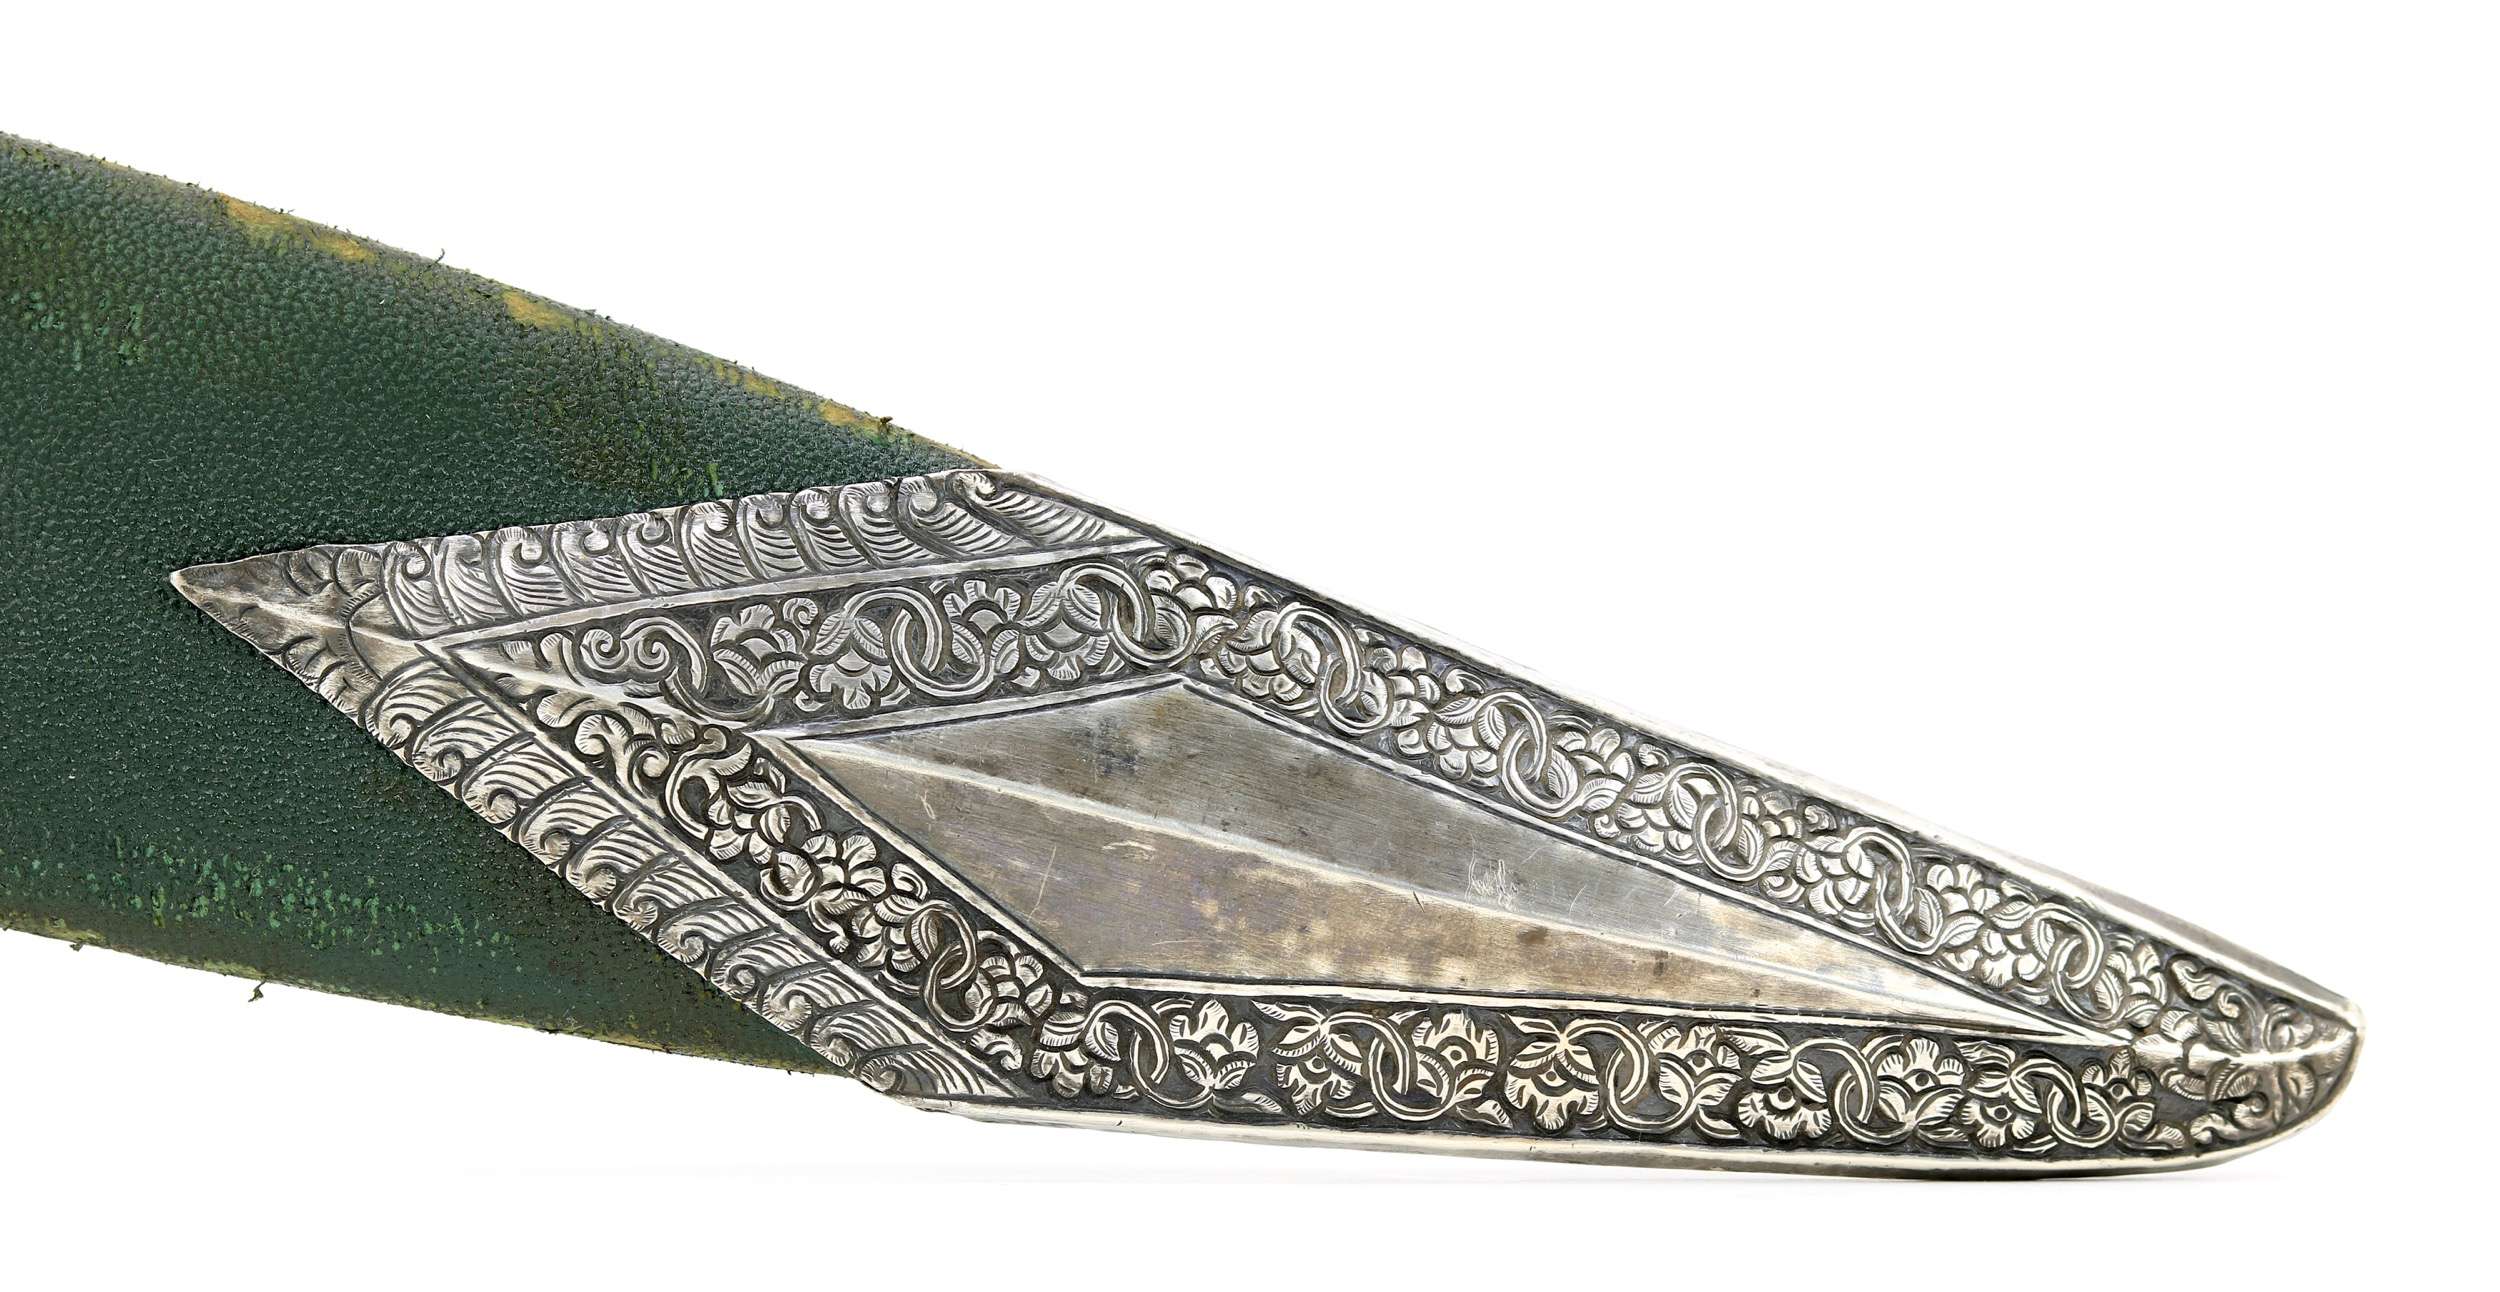 19th century silver mounted kukri